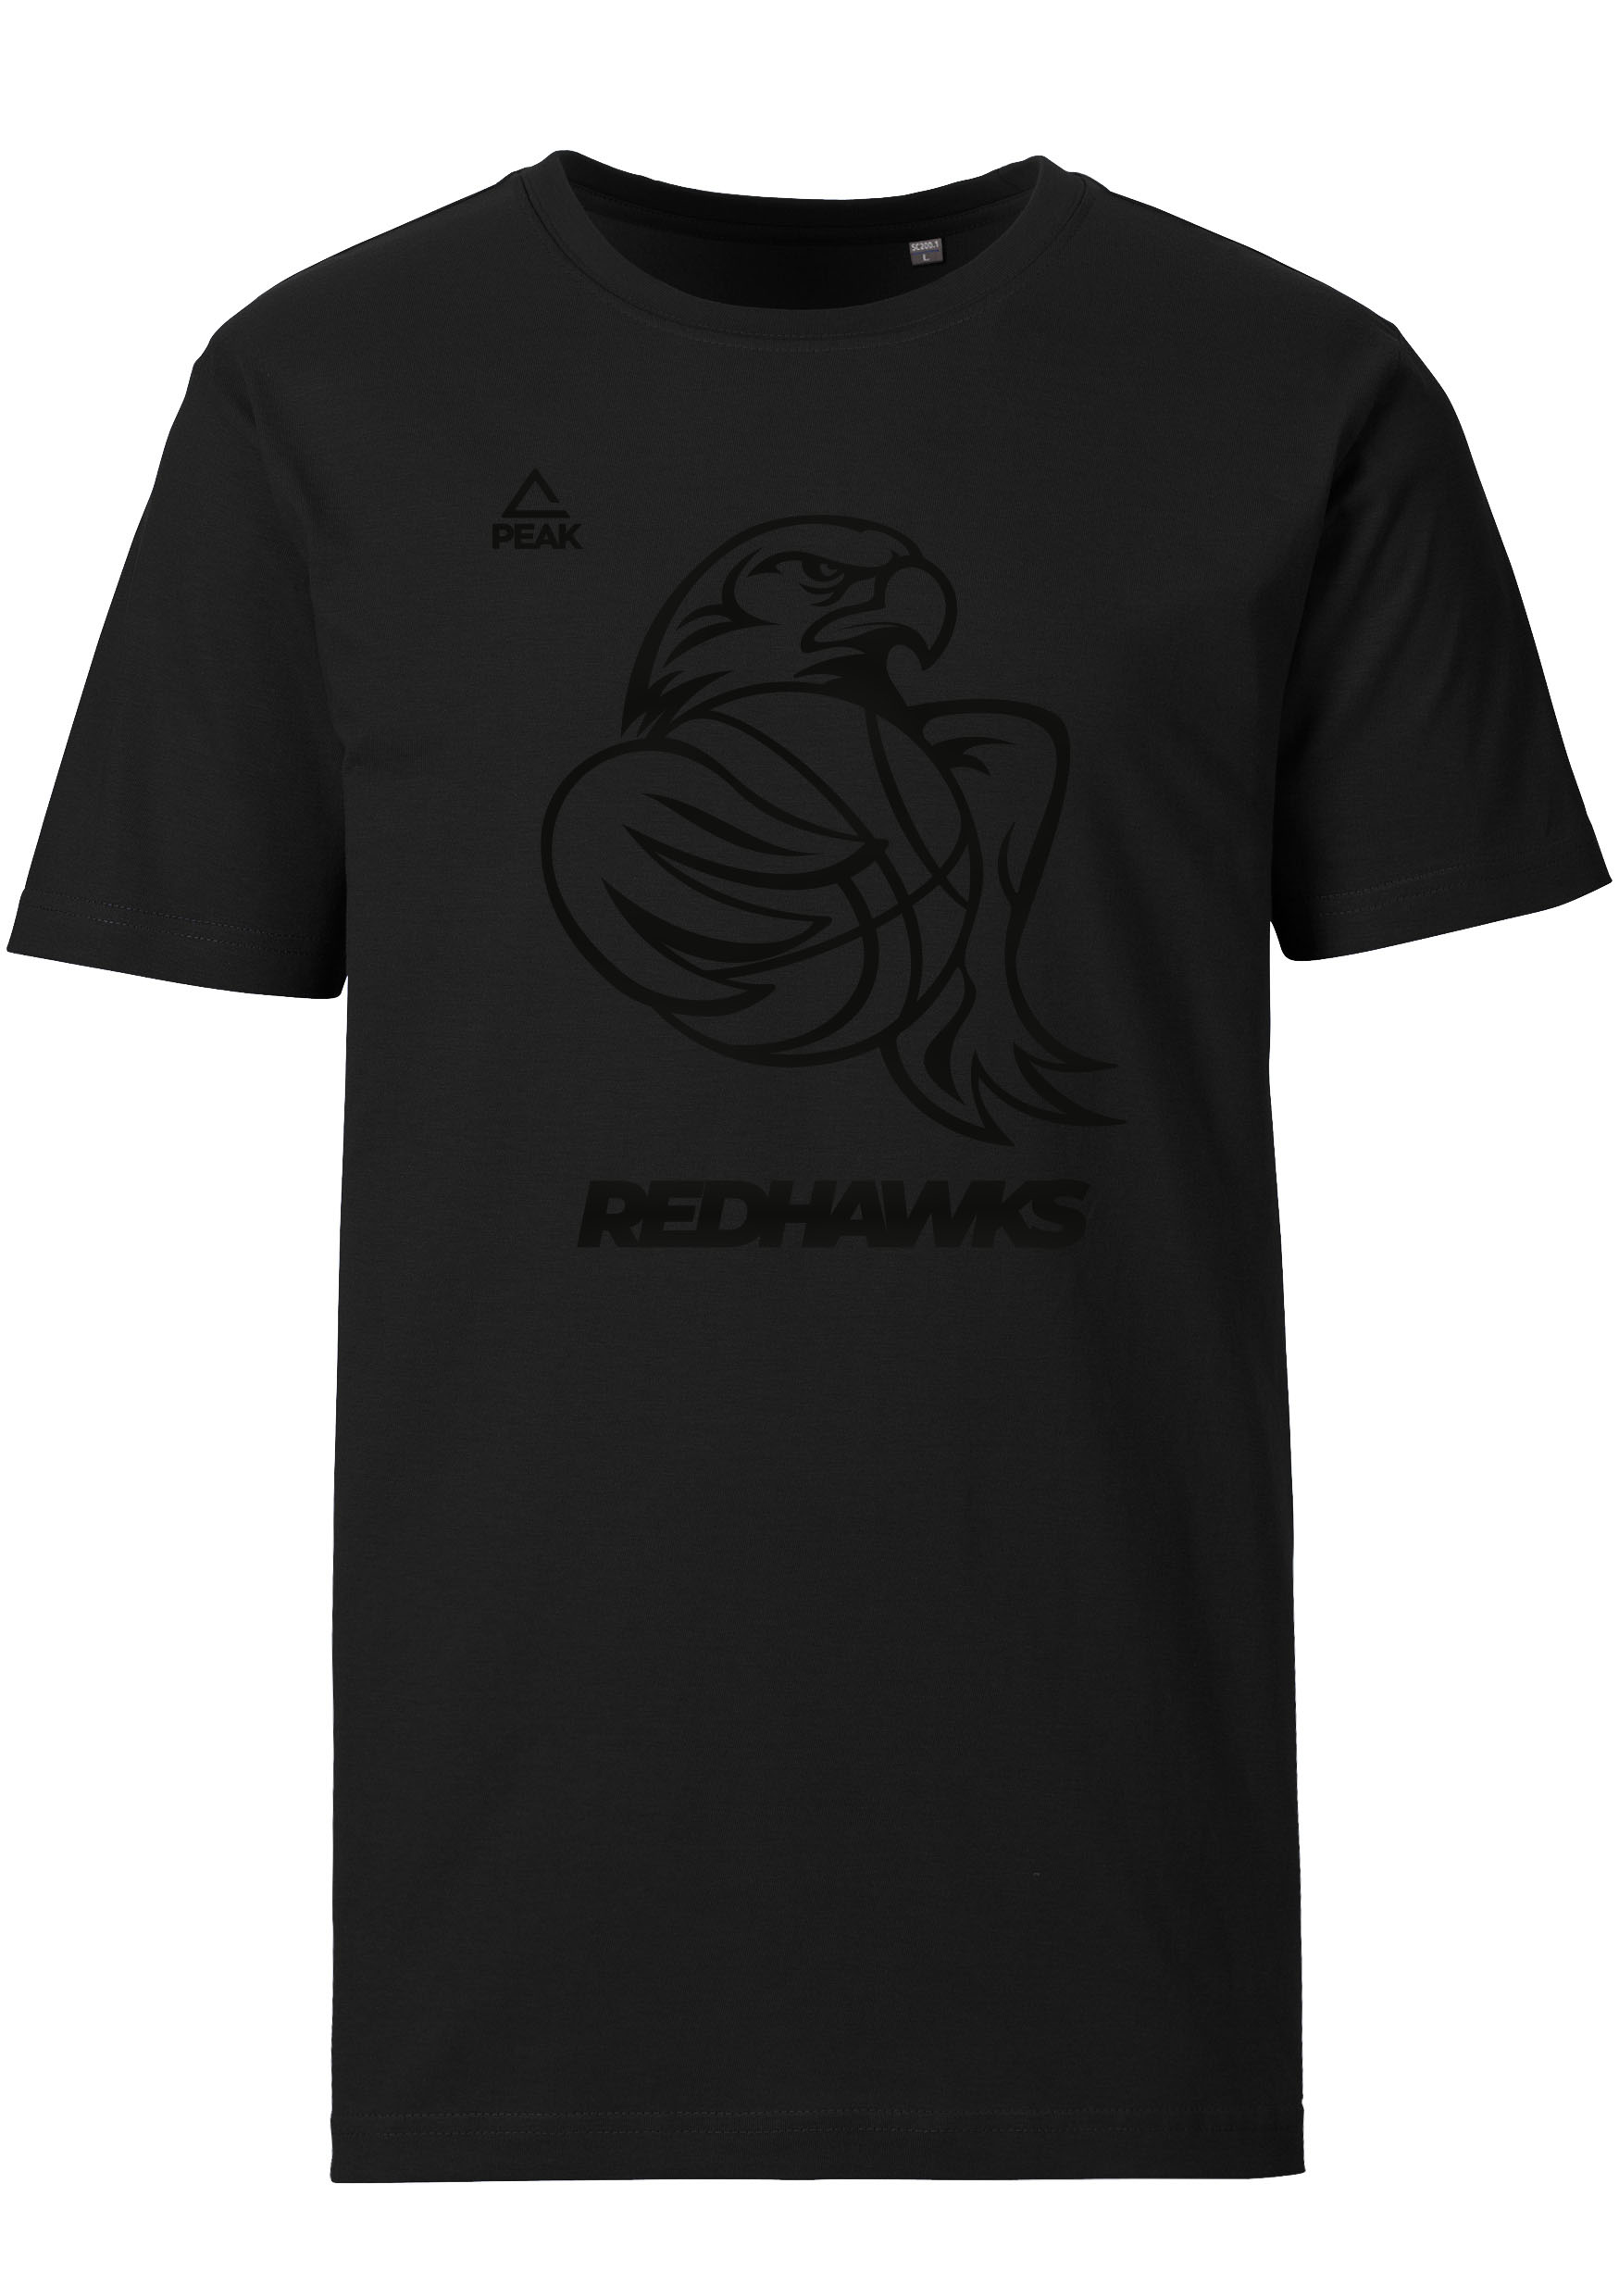 Red Hawks T-Shirt Color Edition schwarz schwarz